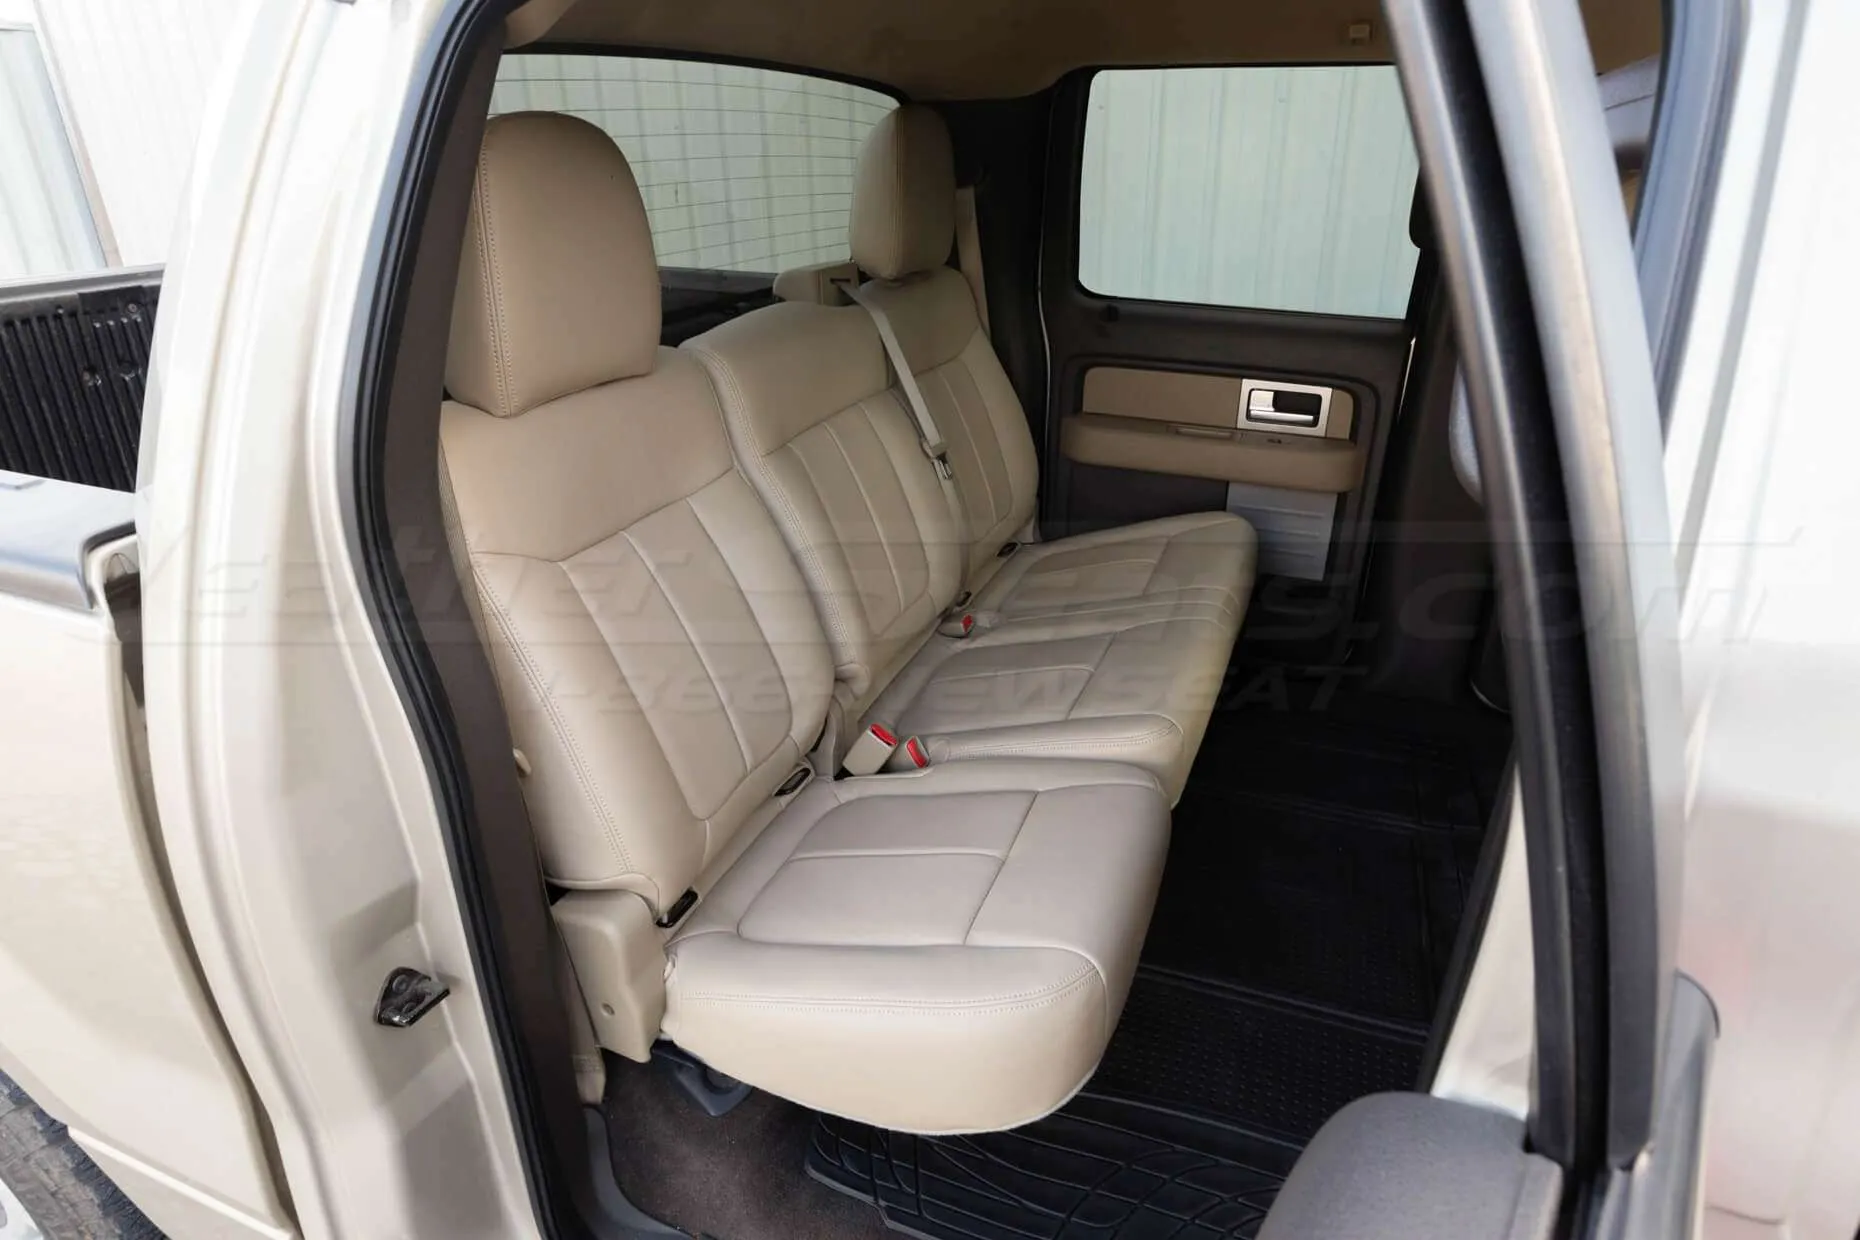 Ford F-150 Leather Upholstery Kit - Sandstone - Installed - Rear seat passenger side